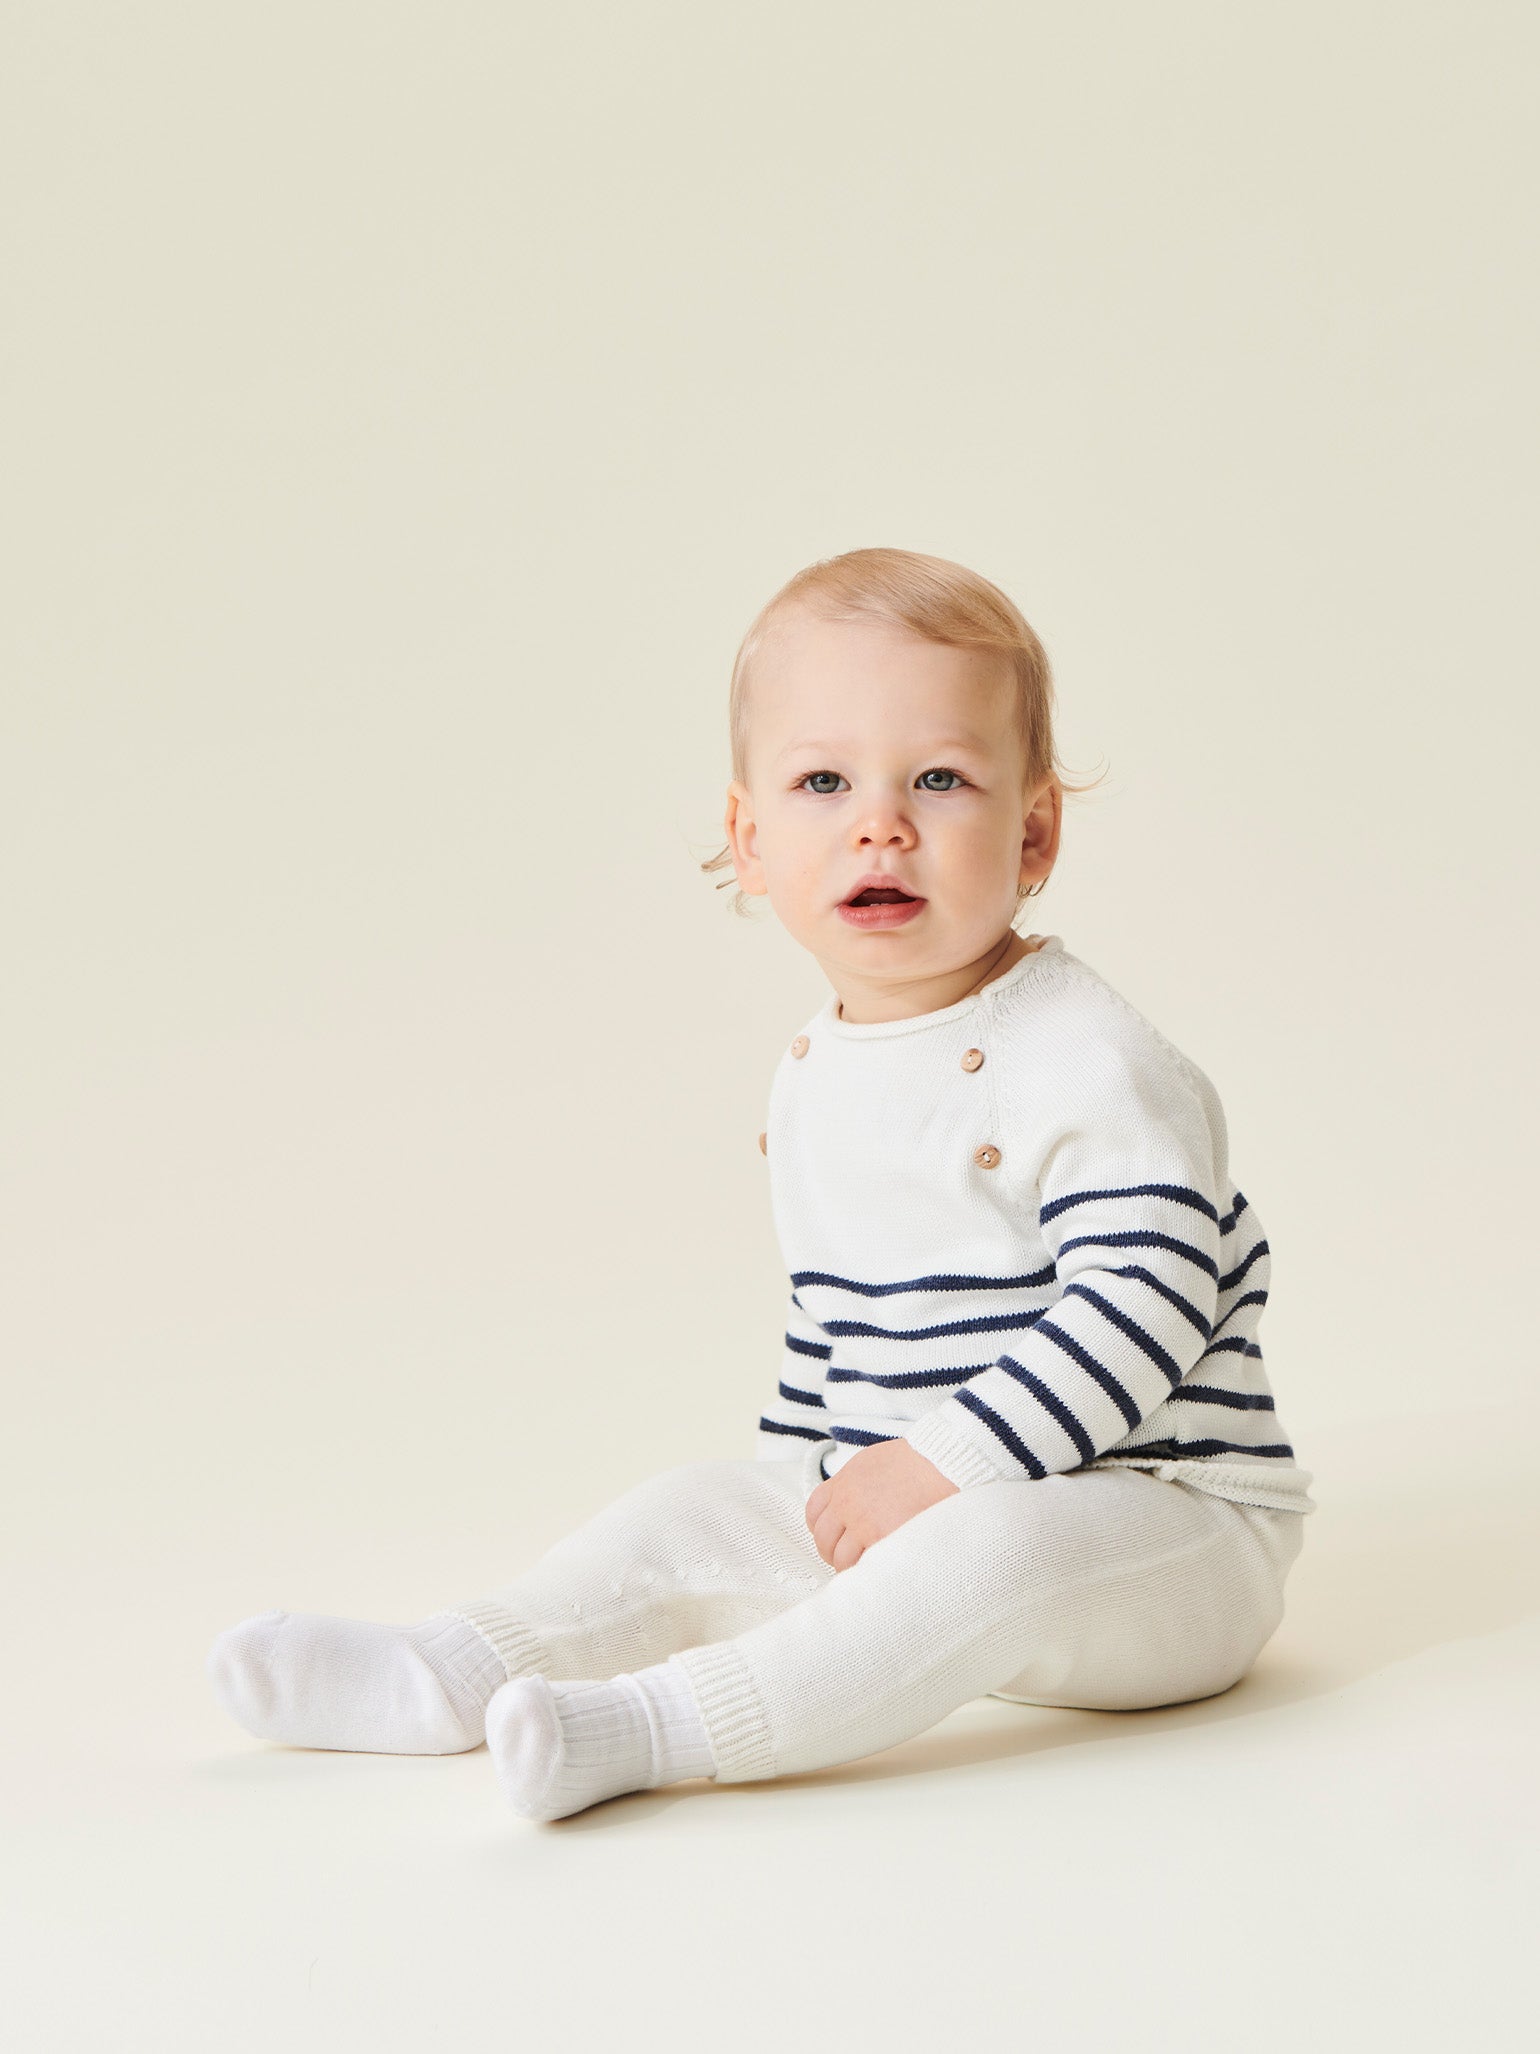 Blue Stripe Monda Cotton Baby Knitted Set